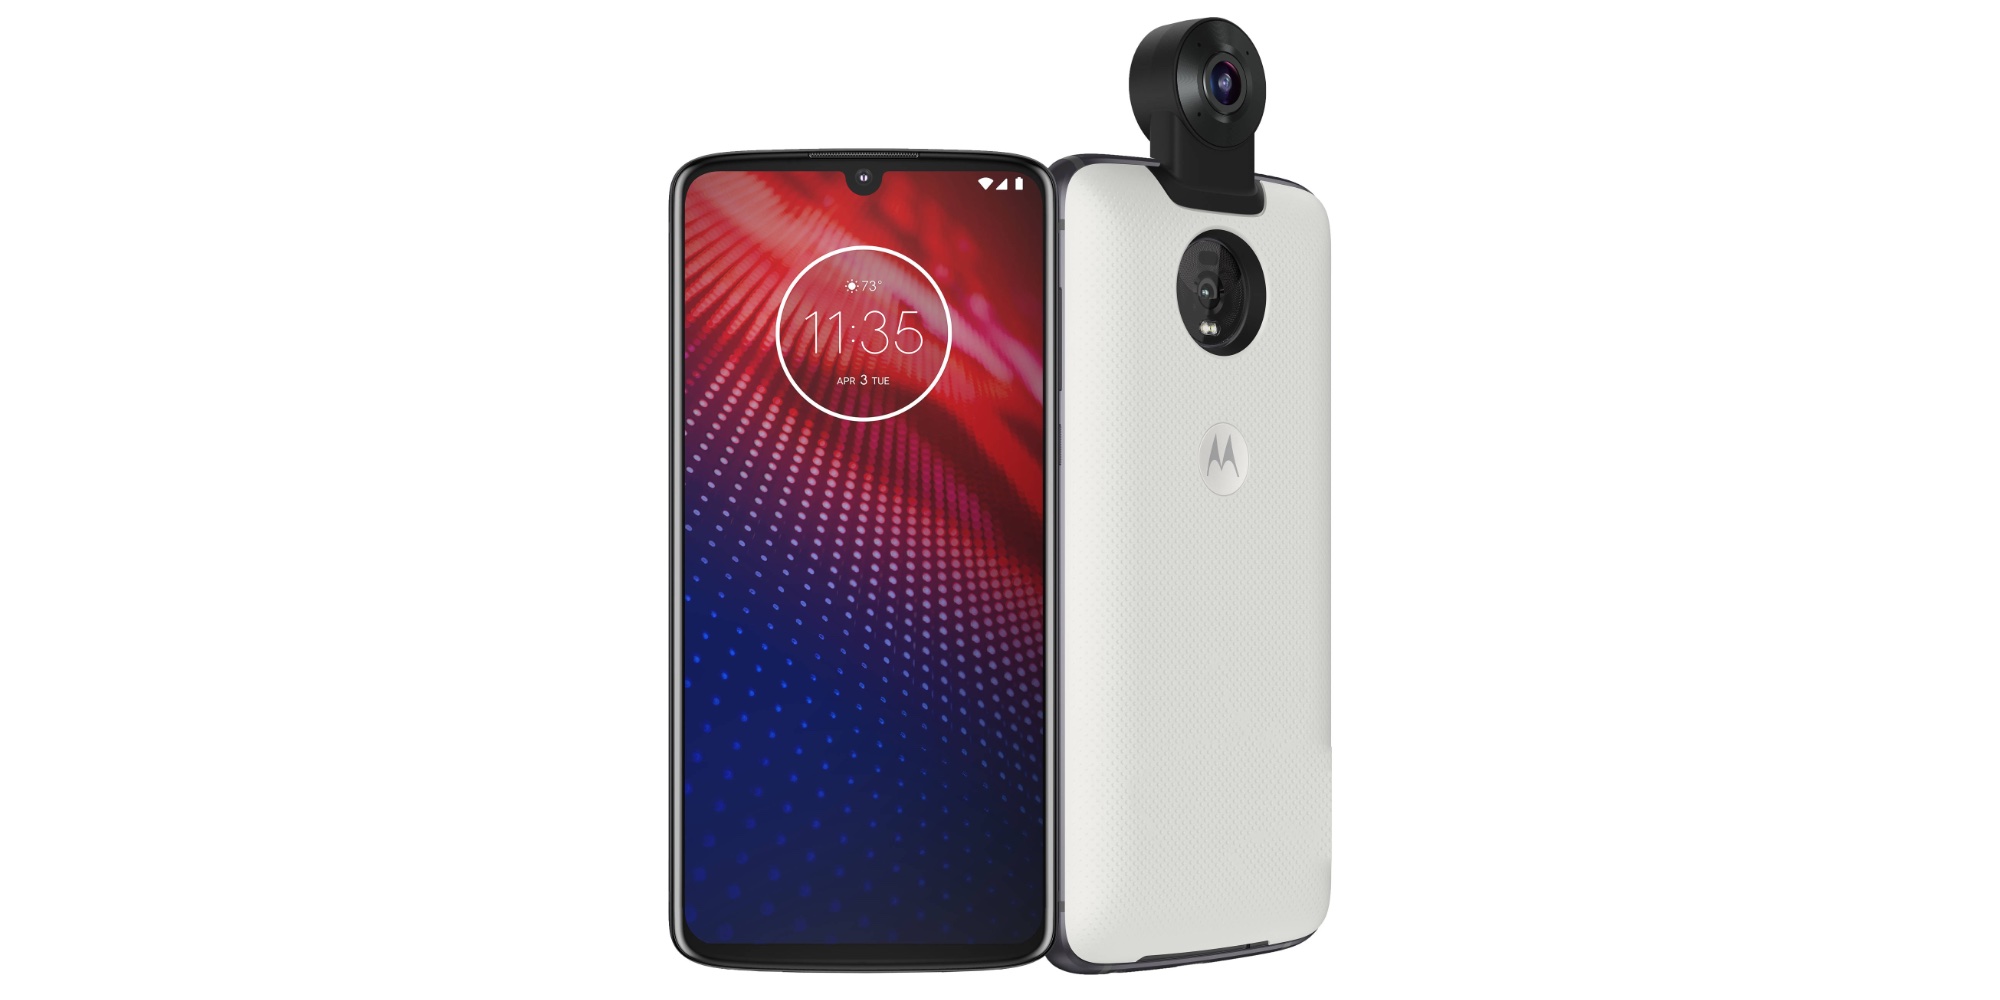 Save 100 on Motorola’s Moto Z4 Smartphone with 360degree